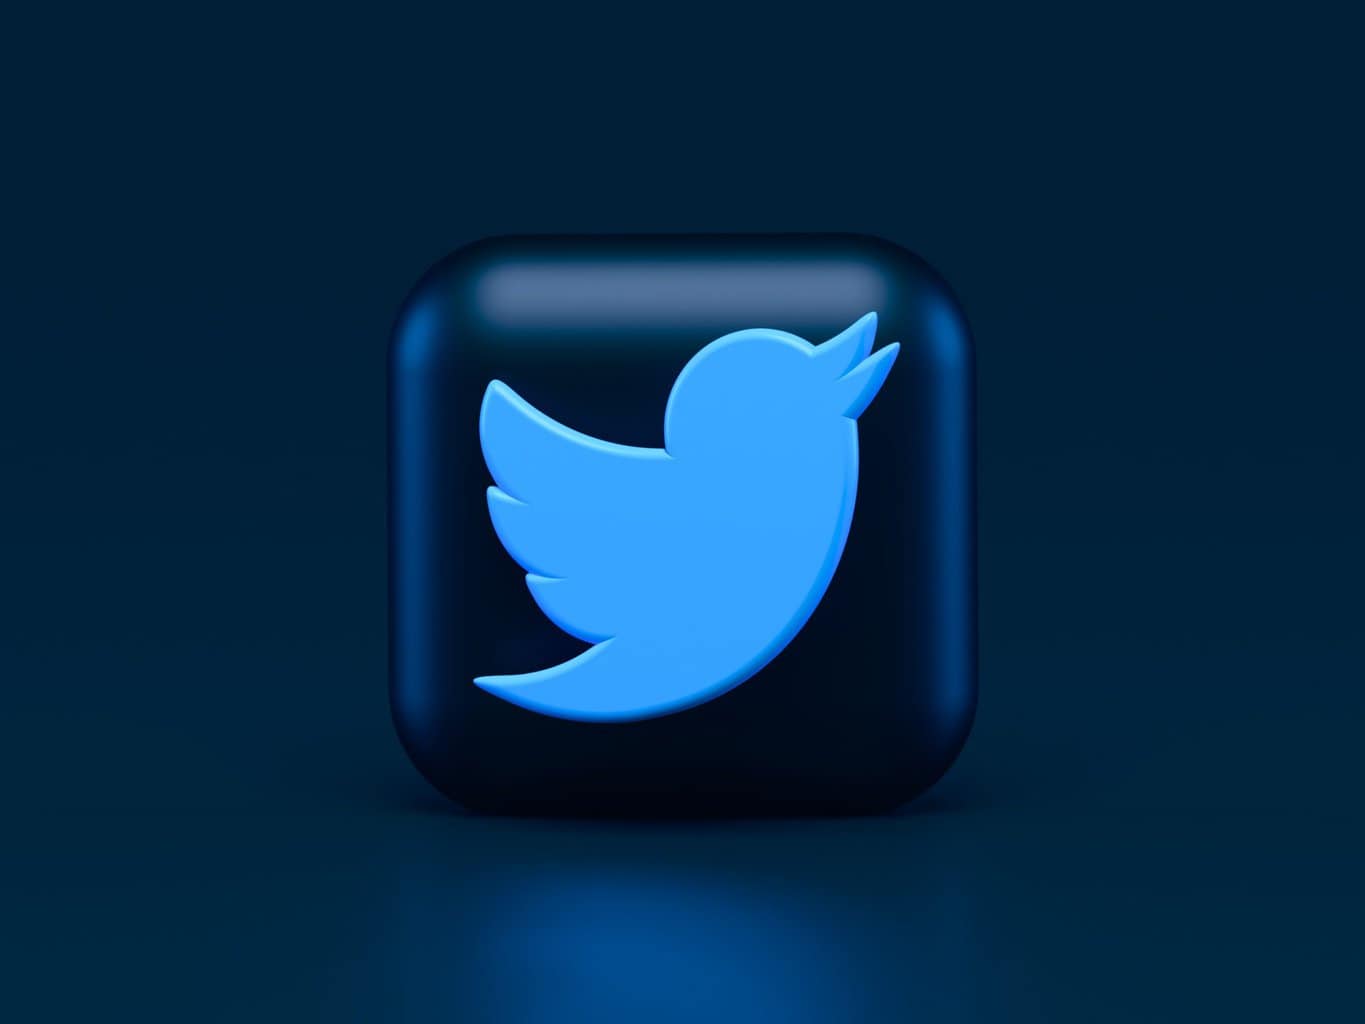 twitlonger, longer, characters, twitter, elon musk, social media marketing, longer tweets